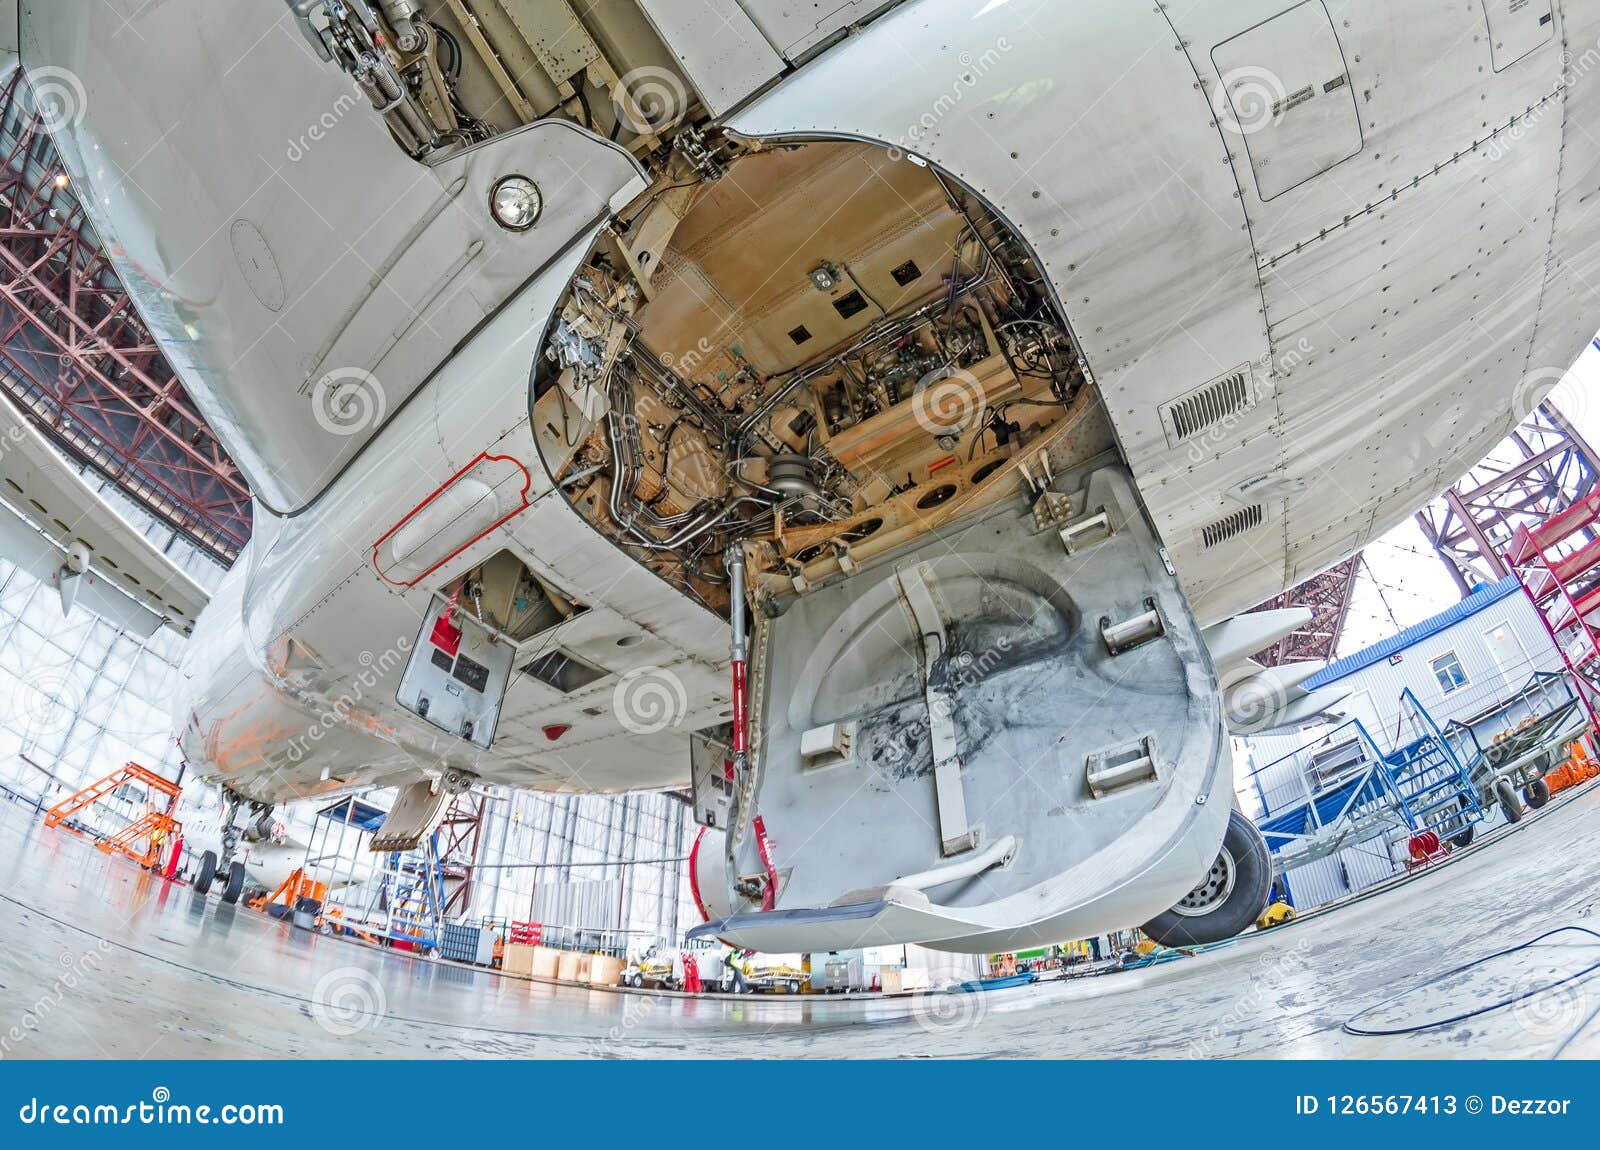 aviation hangar with airplane, close-up landing gear of the airplane landing gear on maintenance repair.